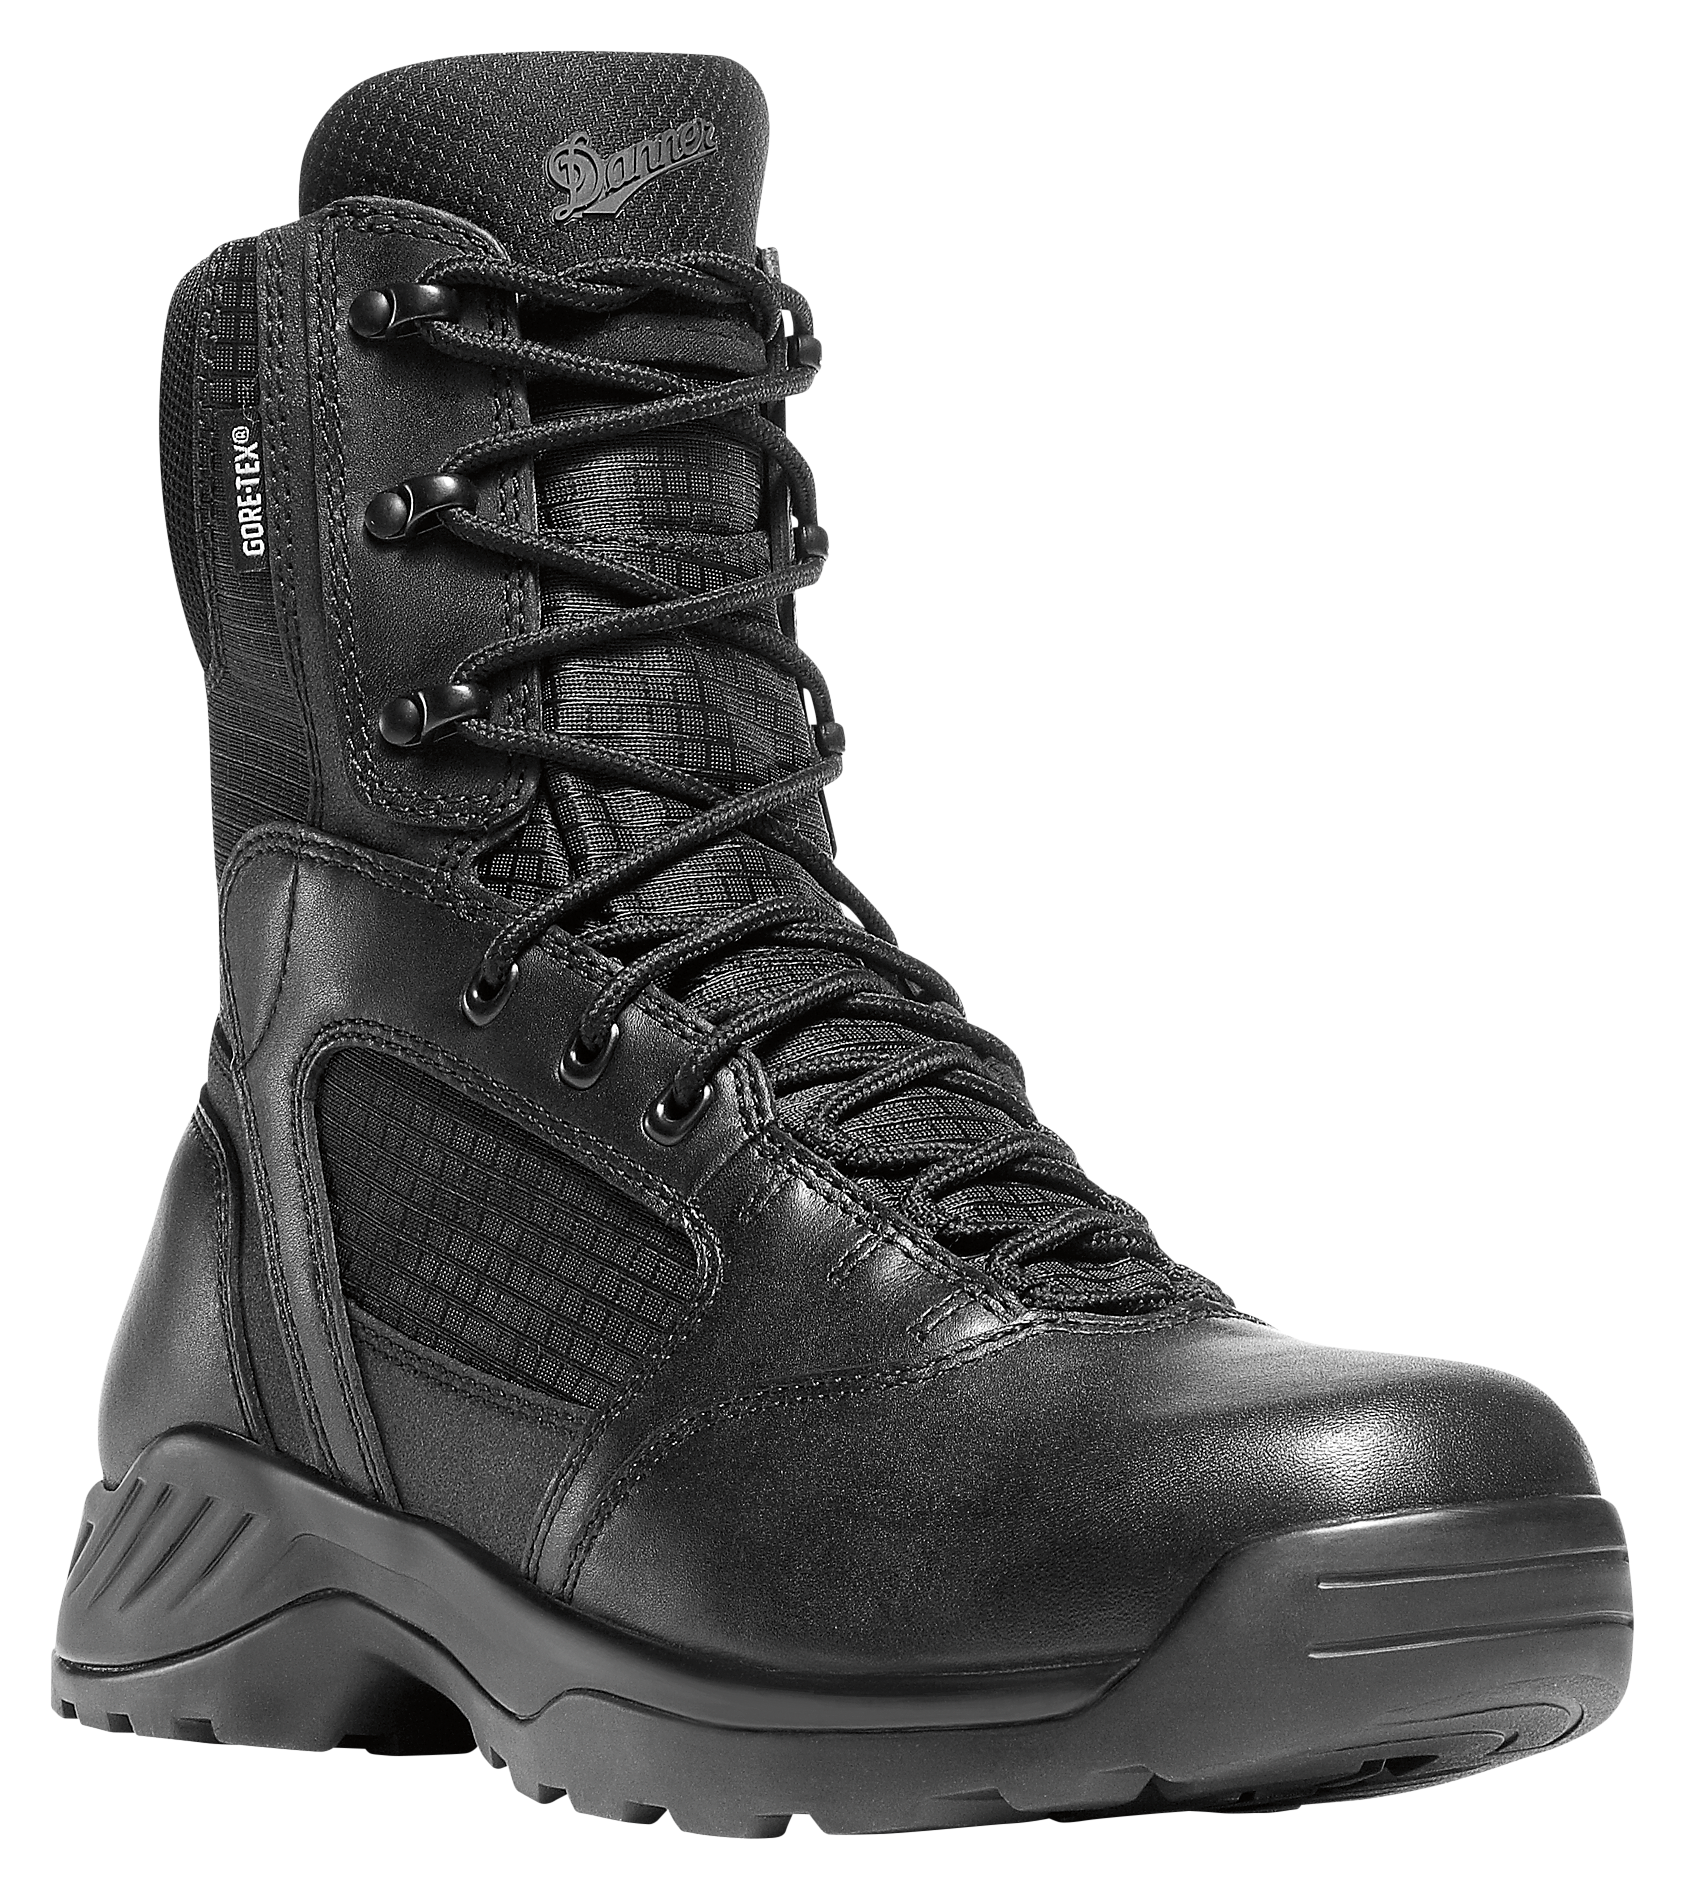 Danner Kinetic GTX Side-Zip Waterproof Tactical Duty Boots for Men - Black - 9W